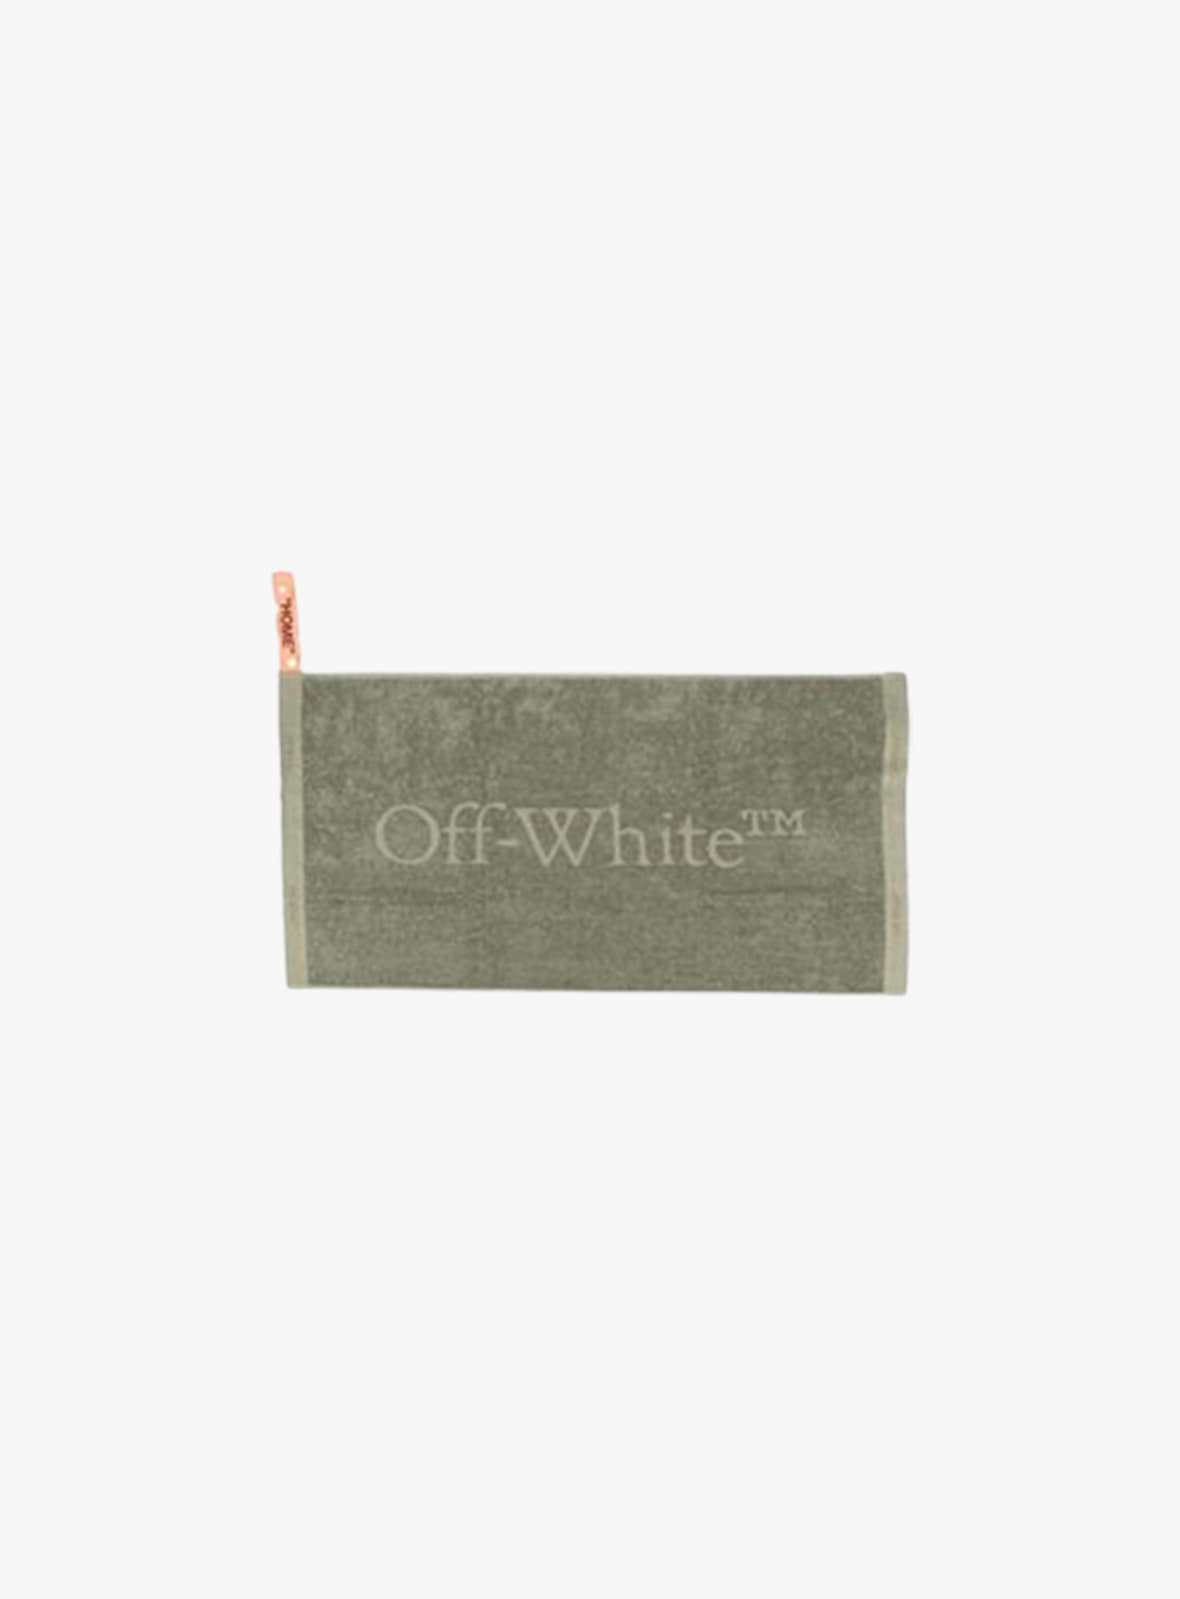 OFF WHITE HOME - General Accessory Off White Home GREENㅣOHZB010T23FA B001 5600